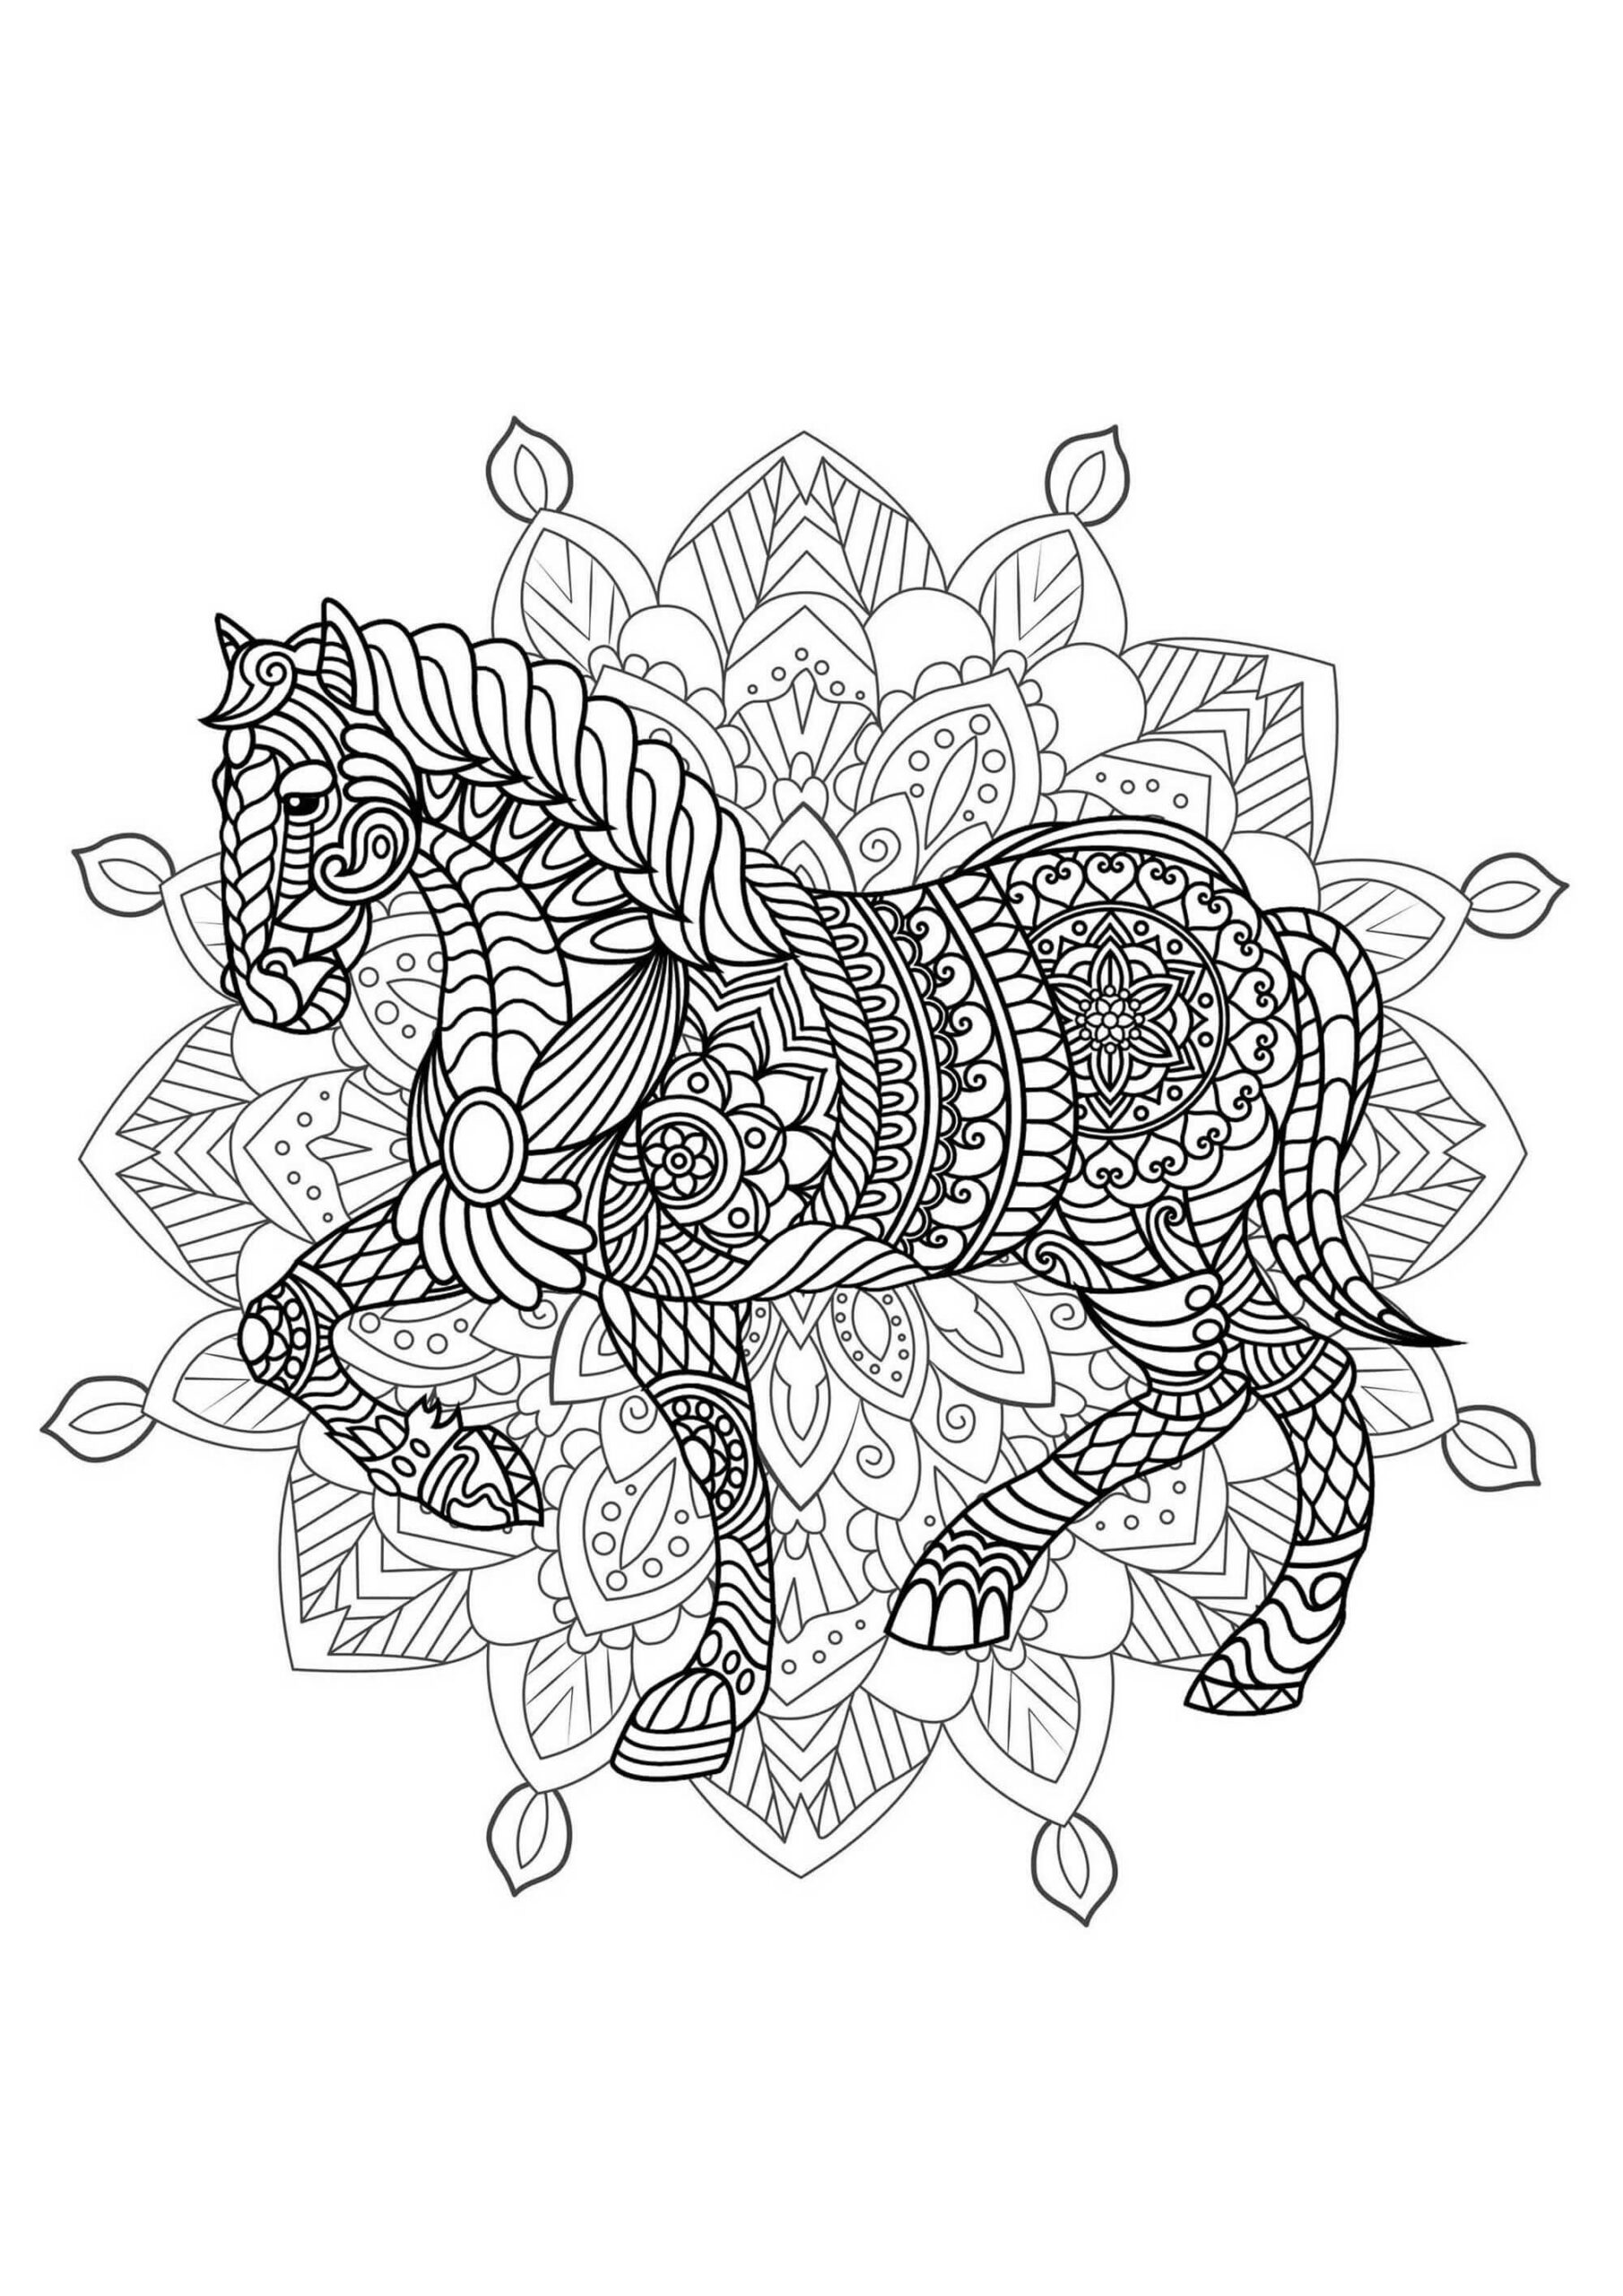 Mandala Horse Coloring Page - Sheet 4 Mandalas